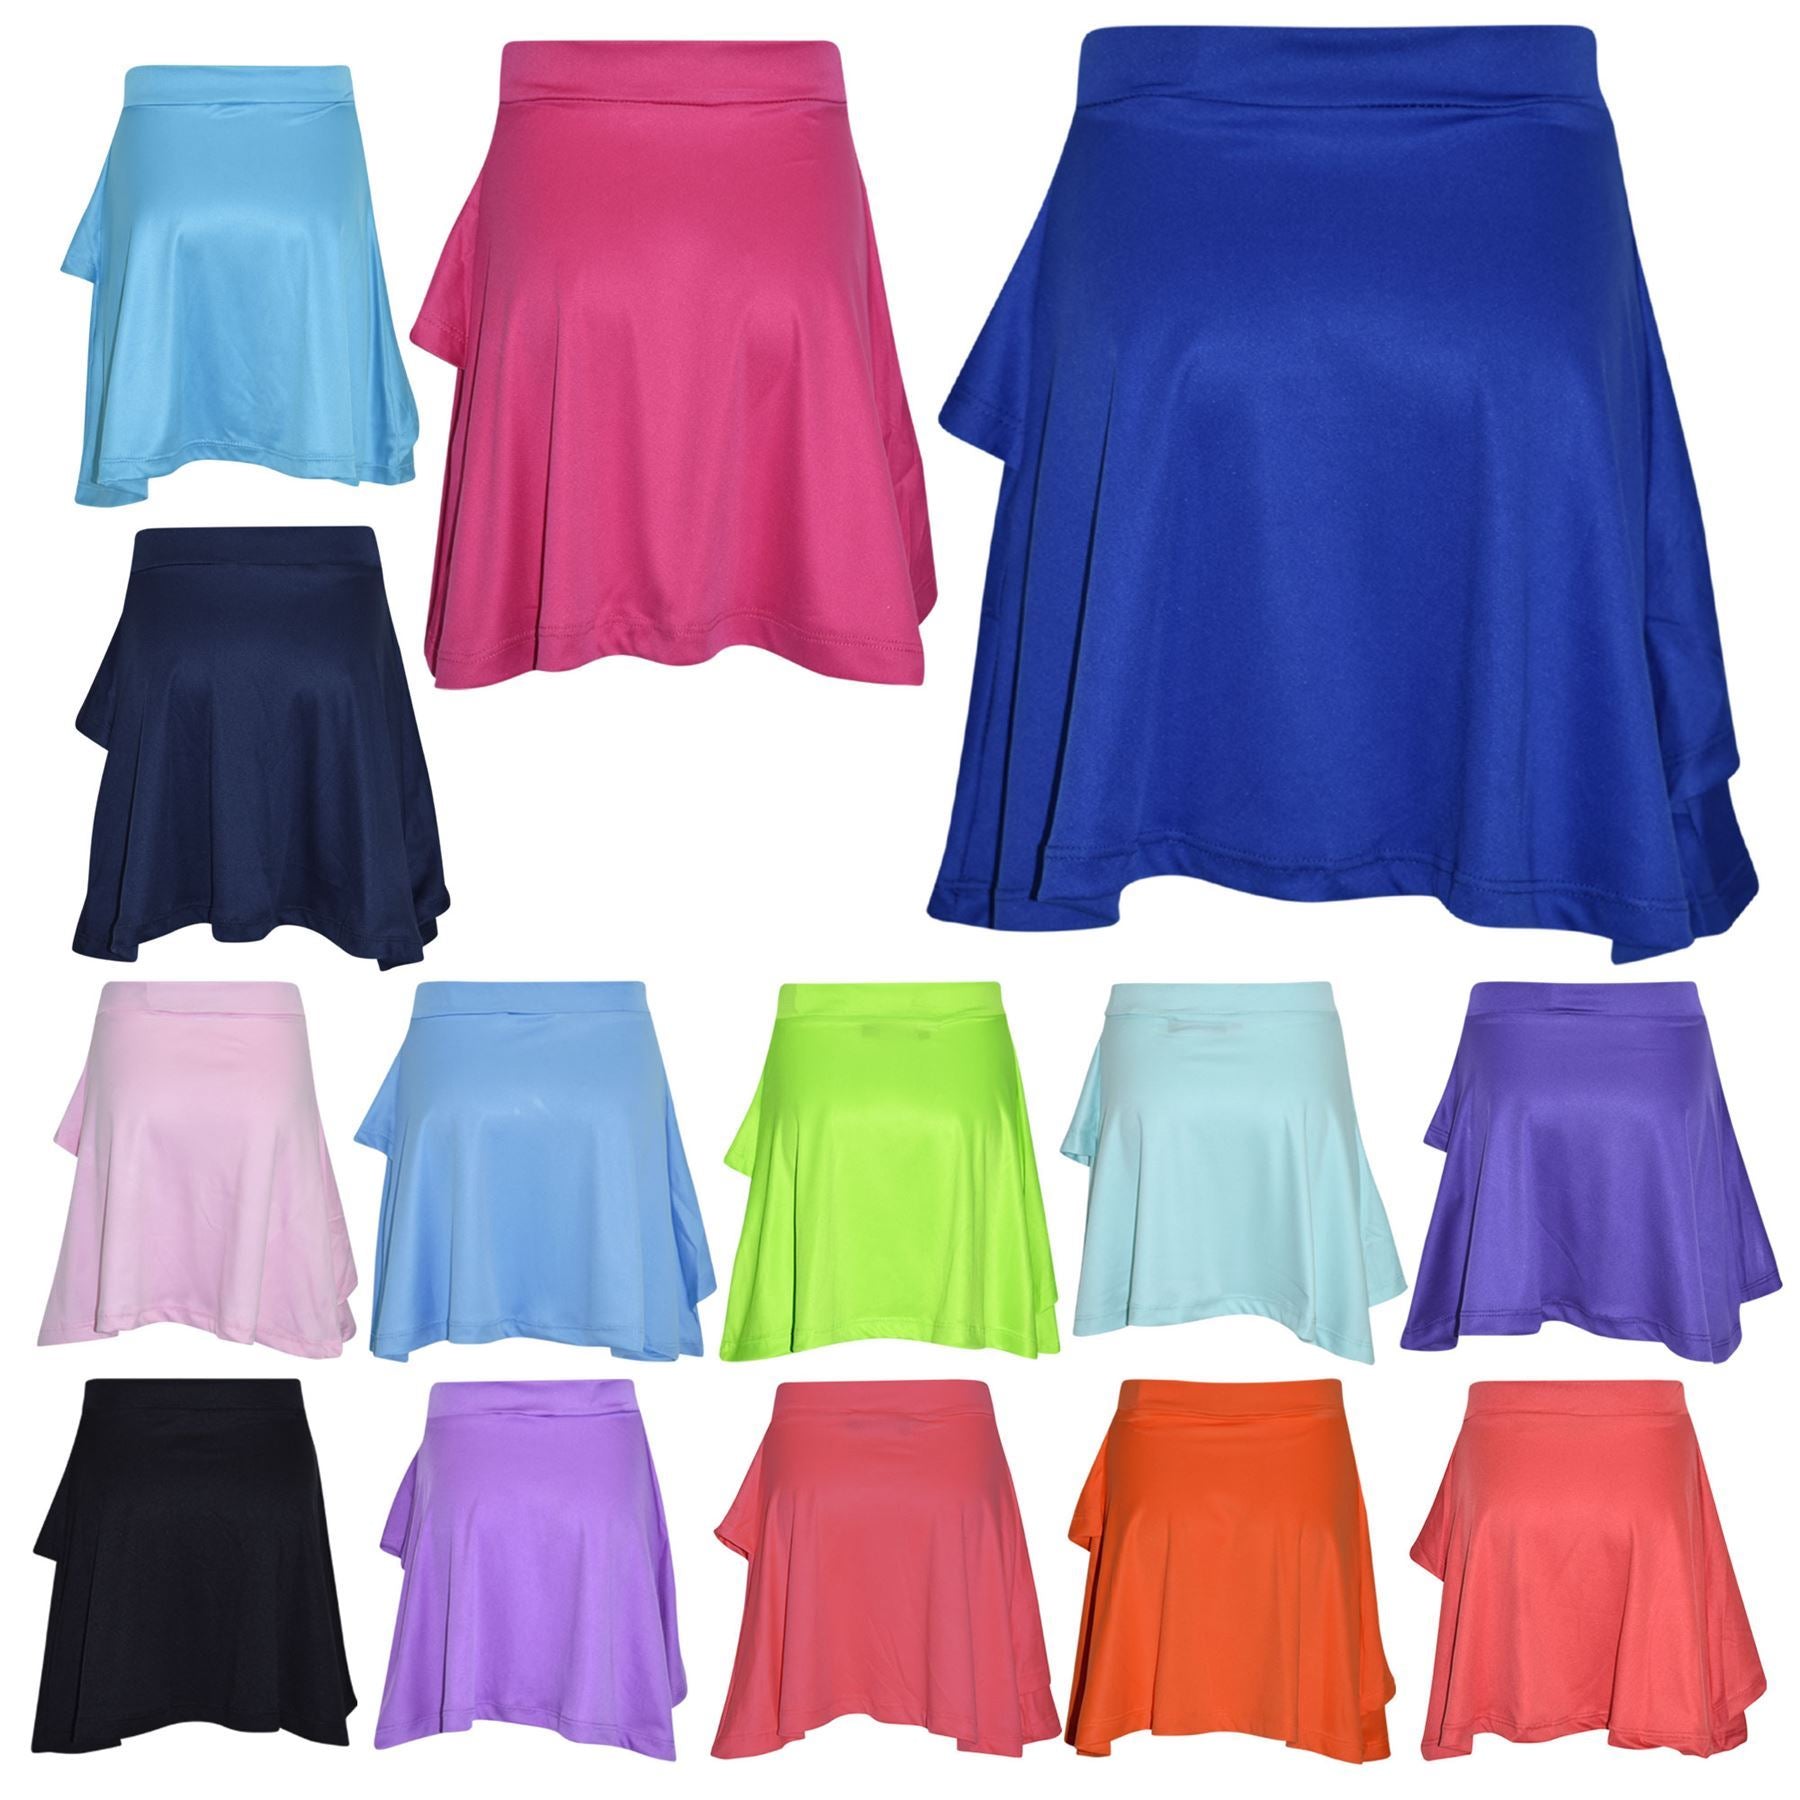 Gilrs Skirt Kids Plain Color School Fashion Dance Frill Skirts Age 5-13 Years